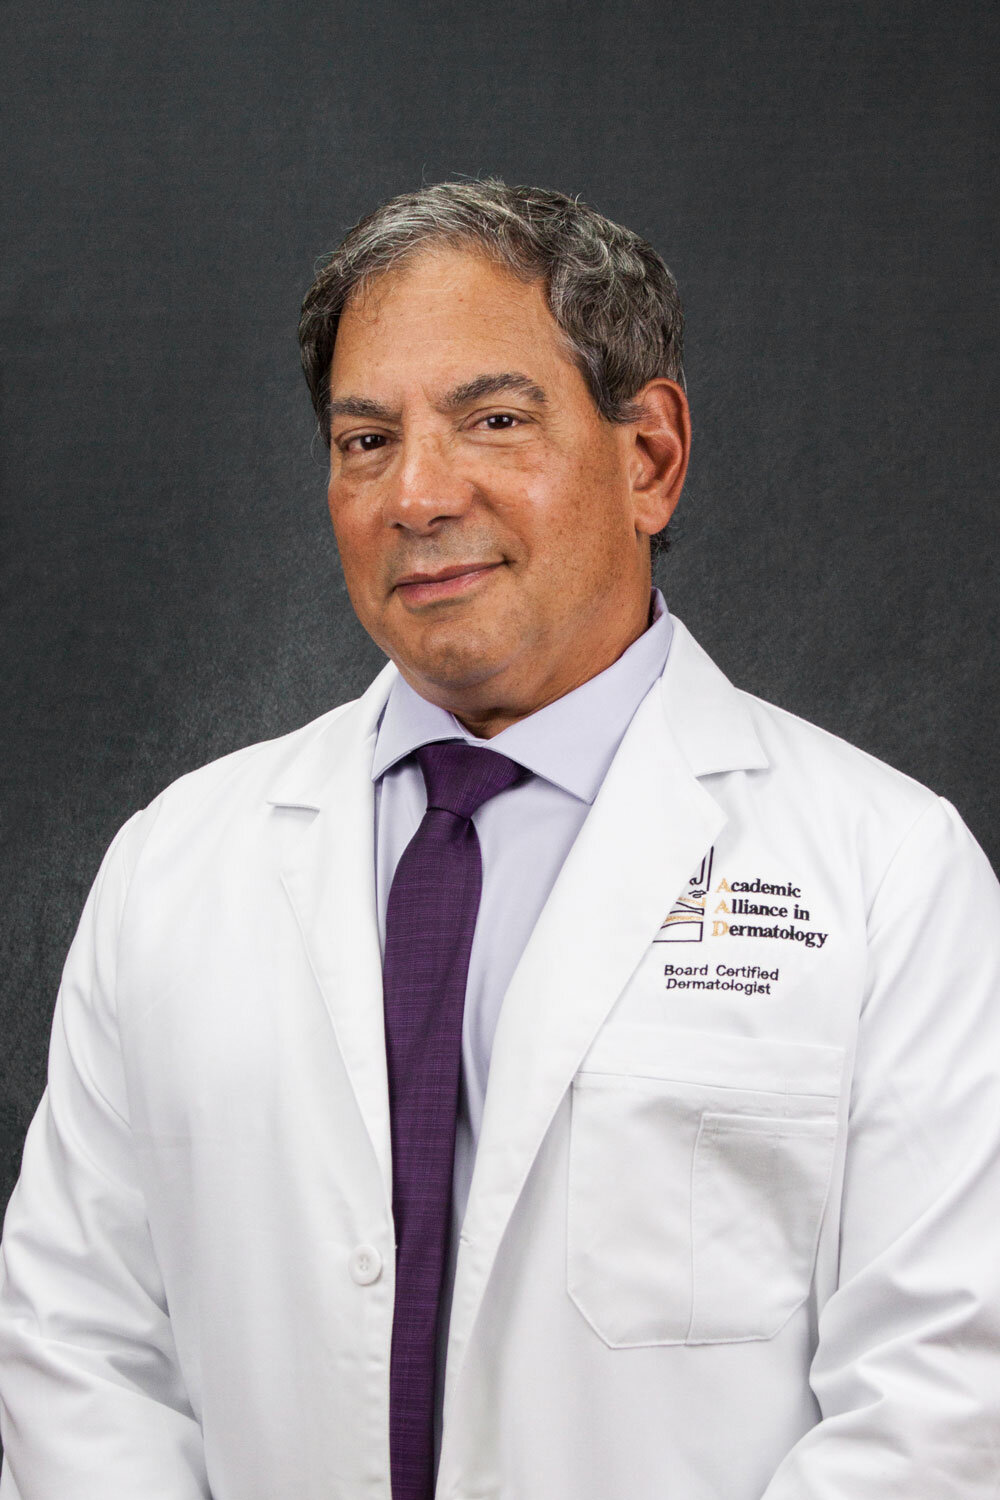 Dr. Robert Weltman, academic alliance in dermatology, tampa dermatologist, tampa dermatology, dermatologist in Tampa